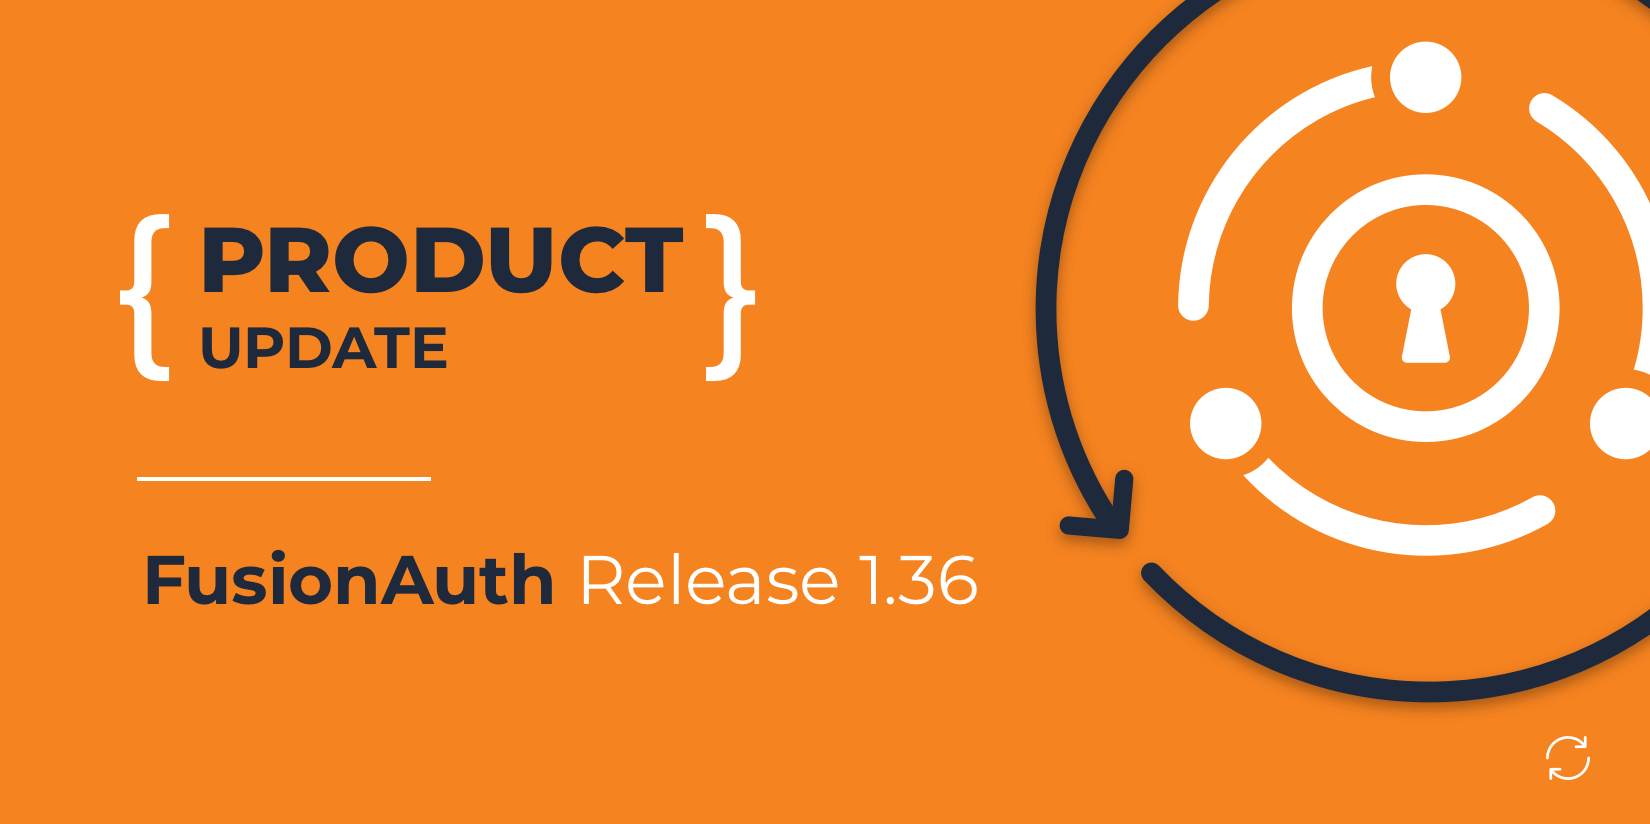 Announcing FusionAuth 1.36